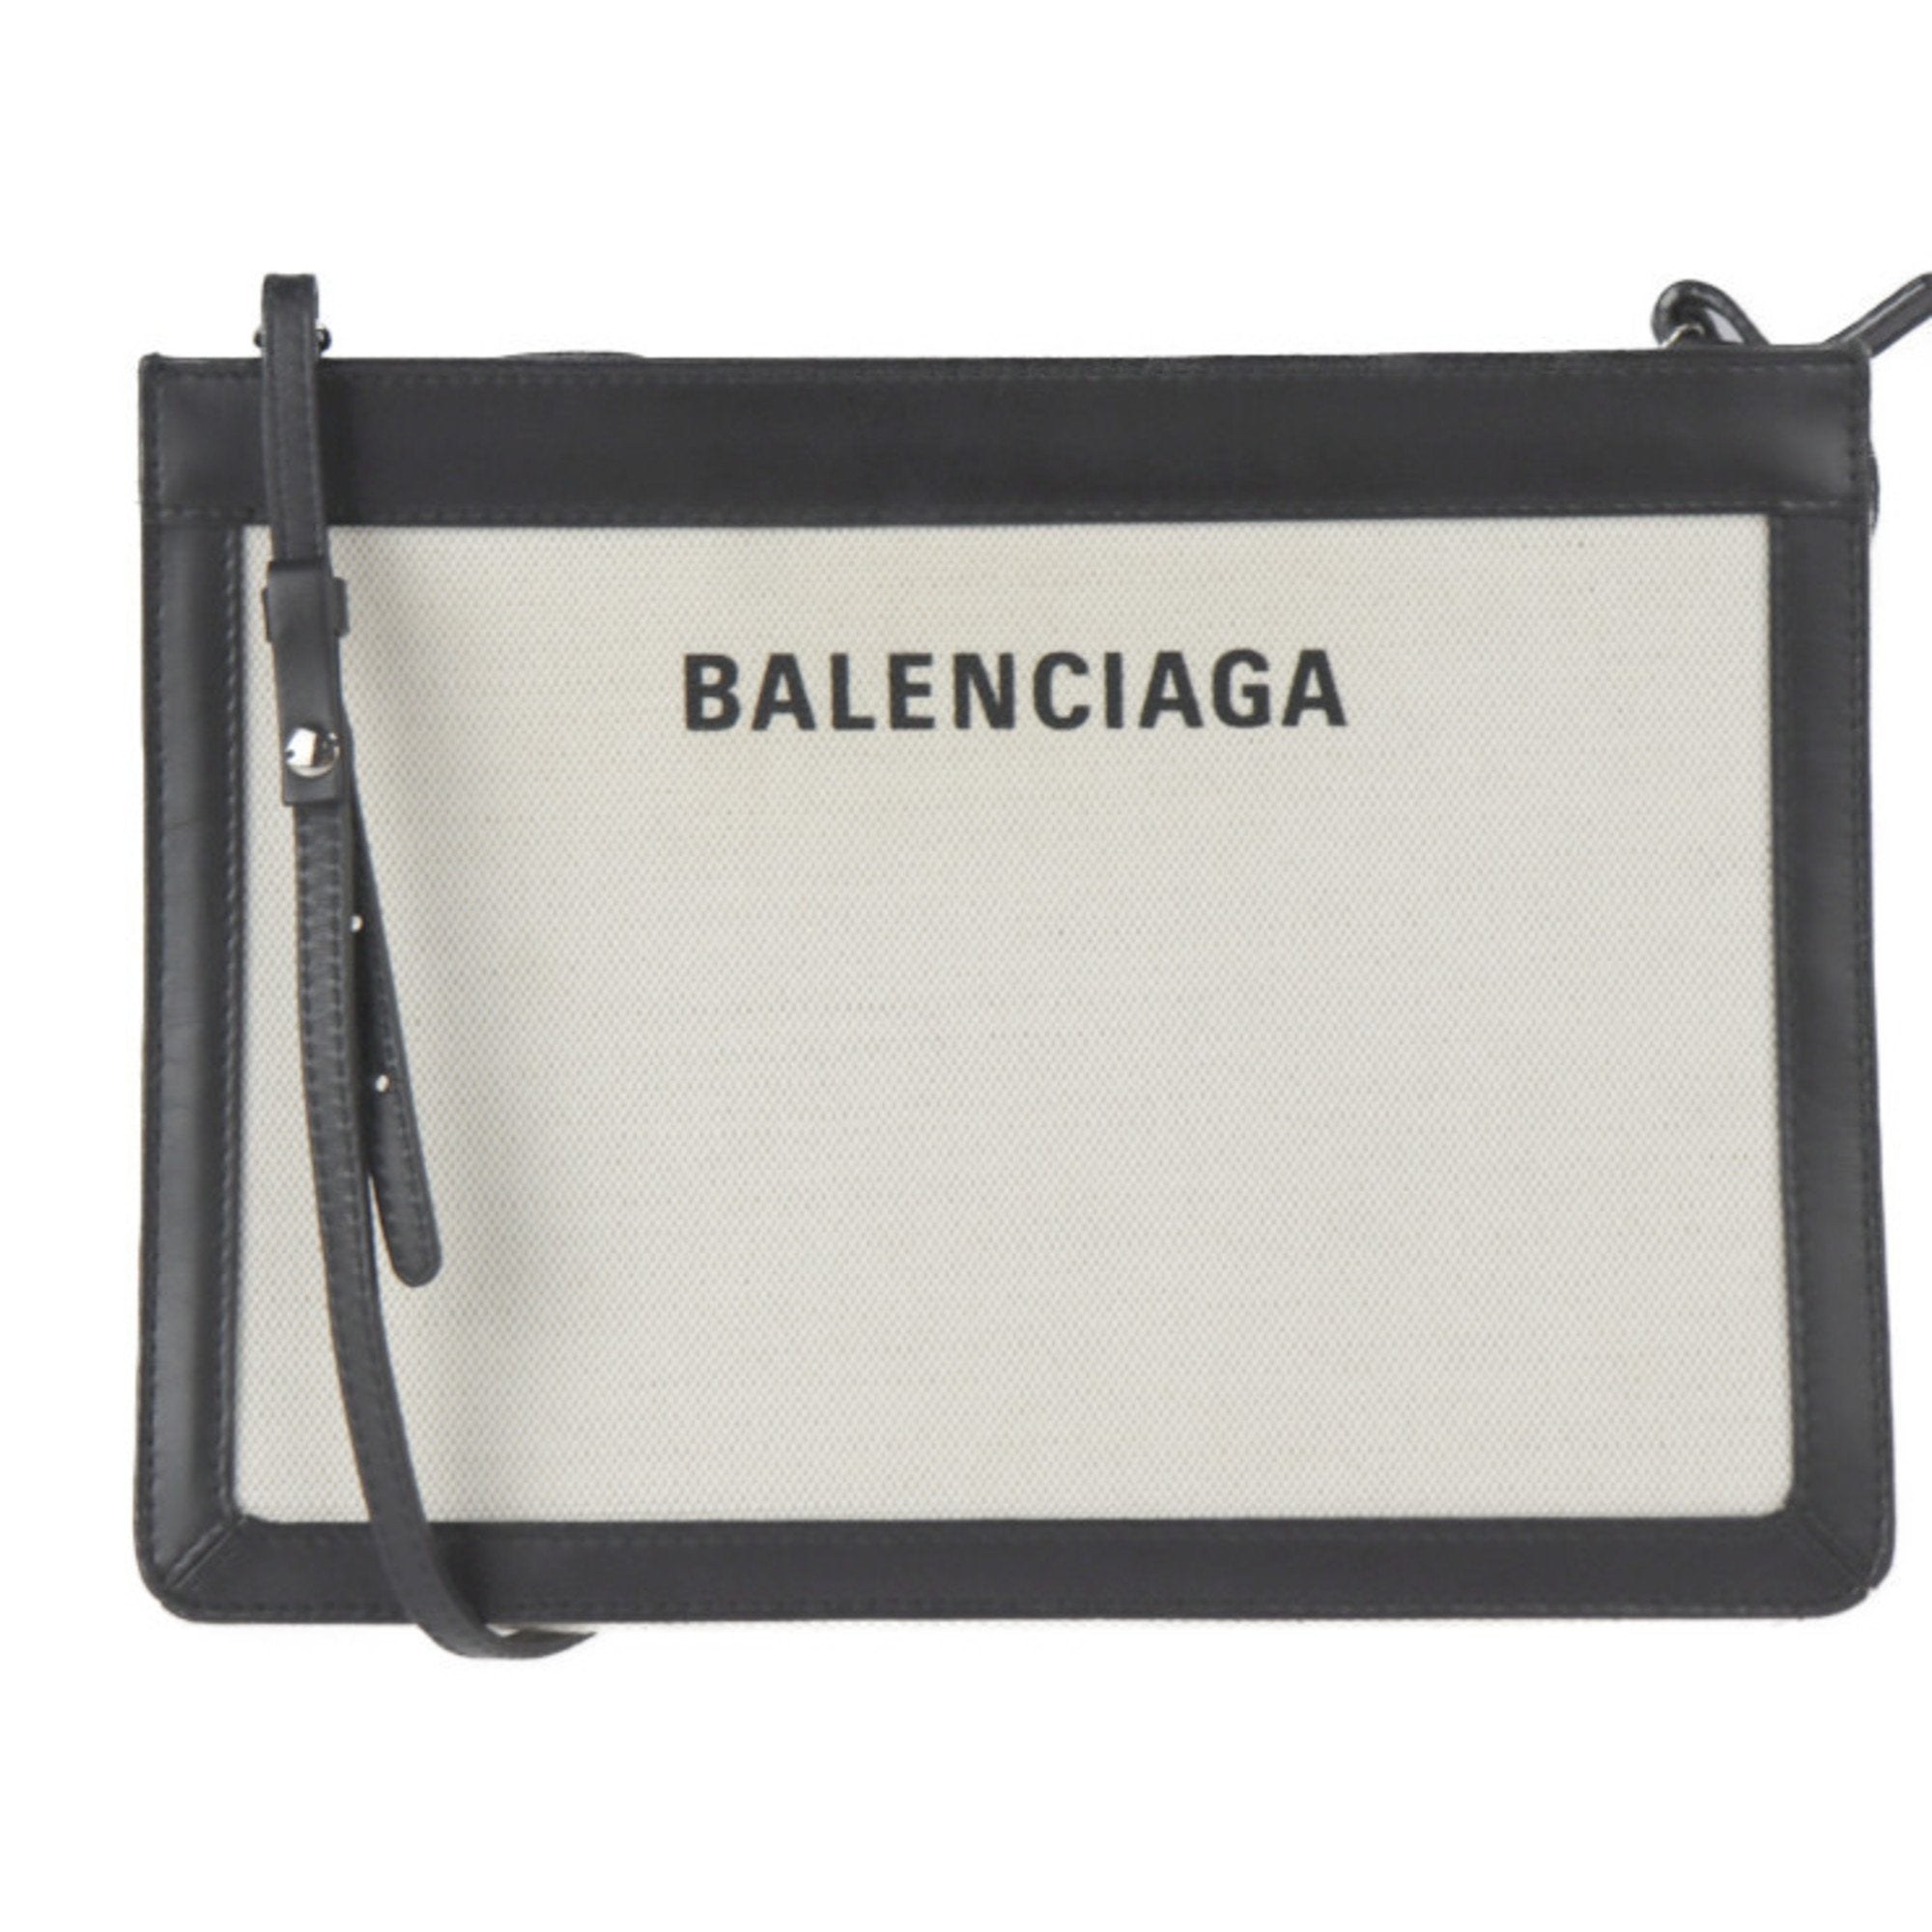 BALENCIAGA navy pochette shoulder bag 339937 canvas leather